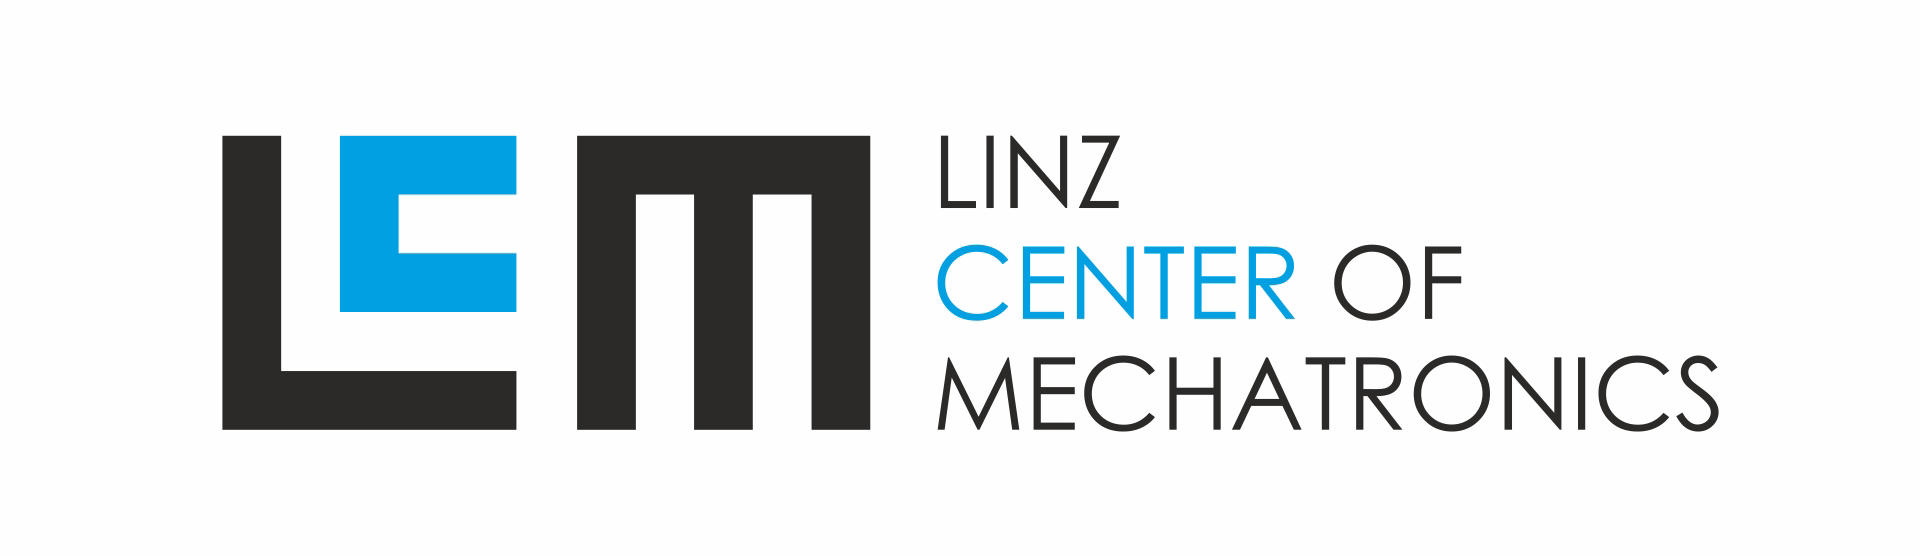 Linz Center of Mechatronics GmbH